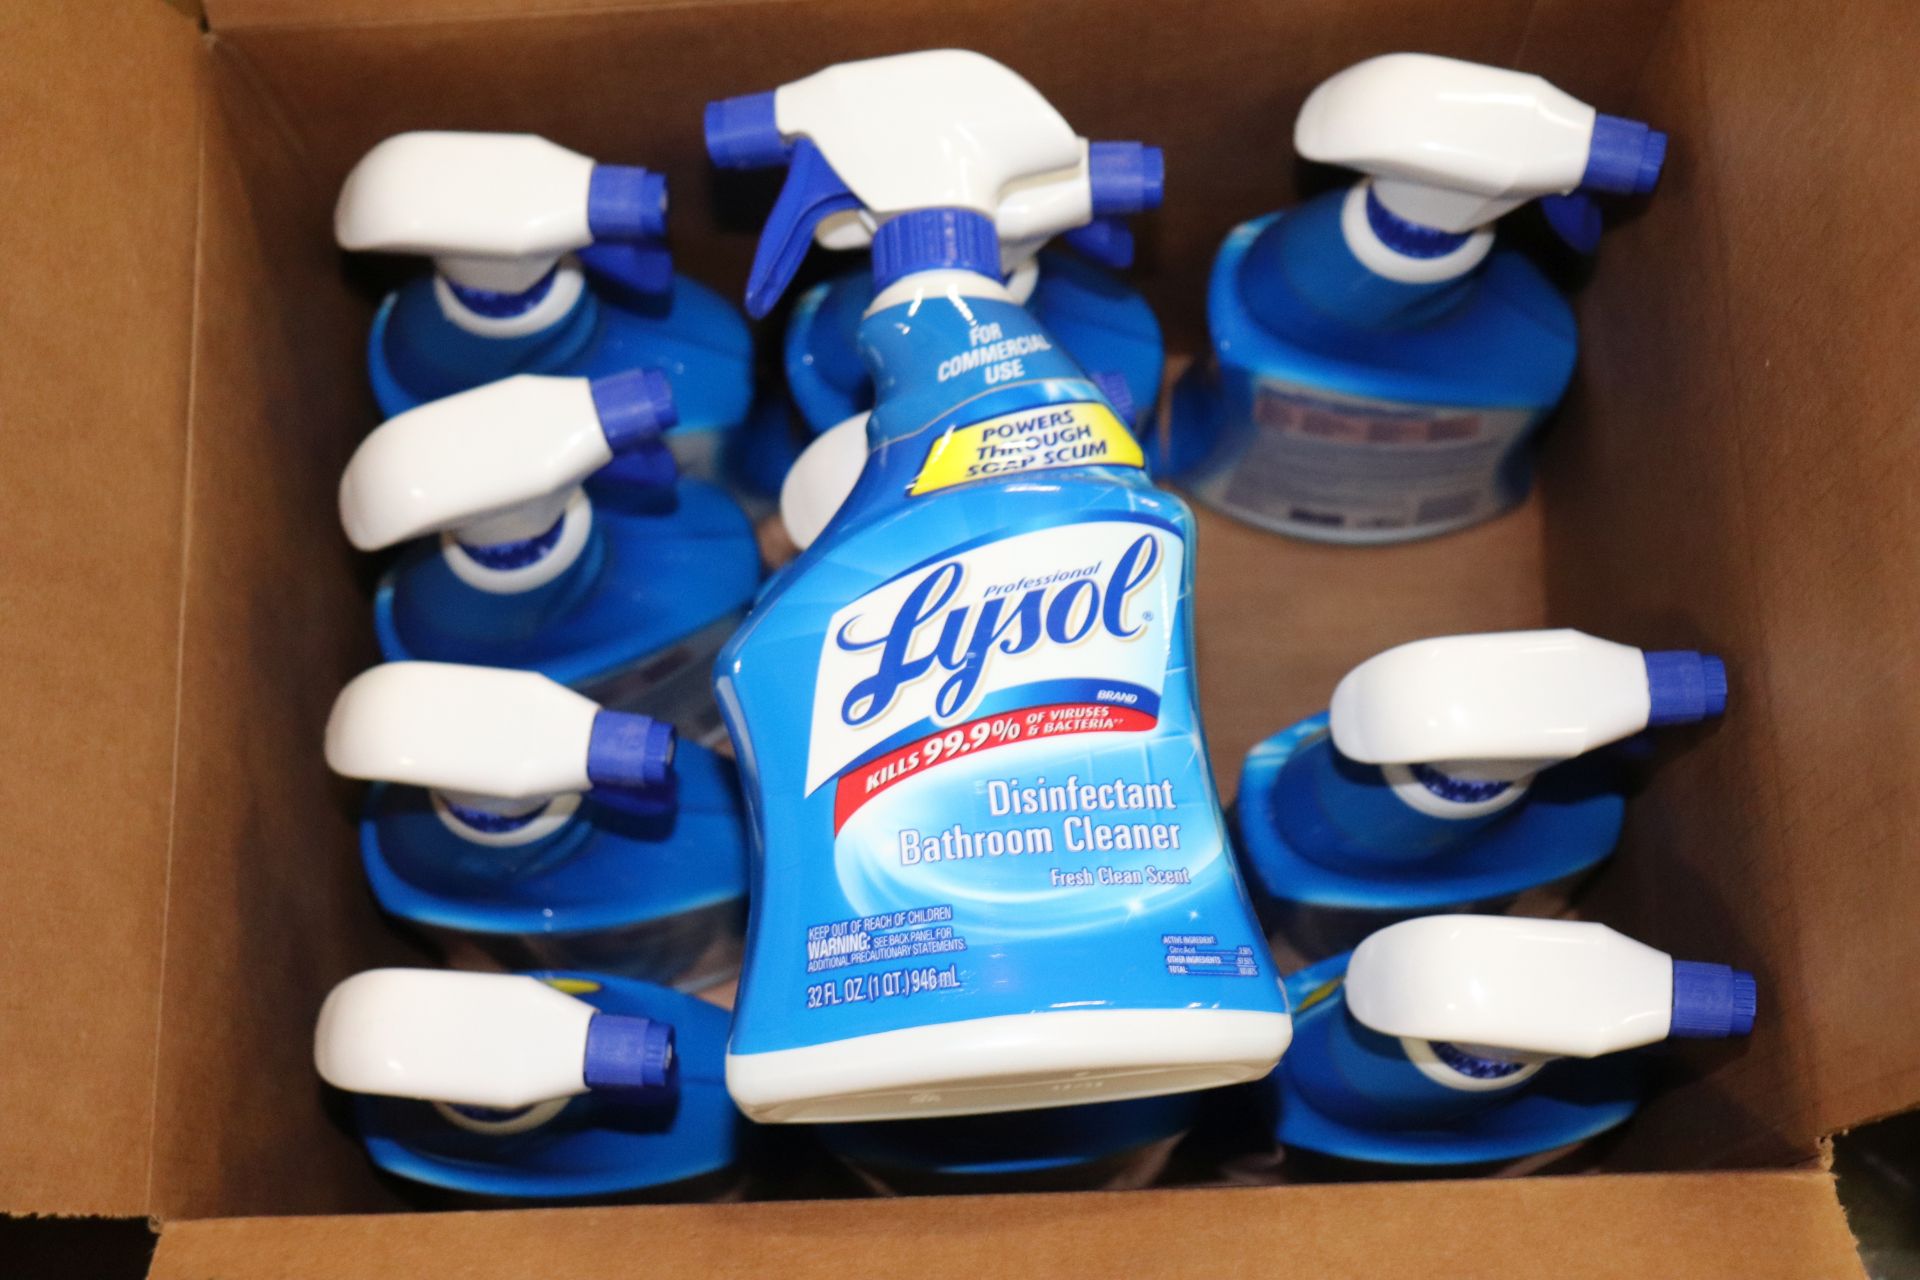 Case of 12 Lysol spray bottles